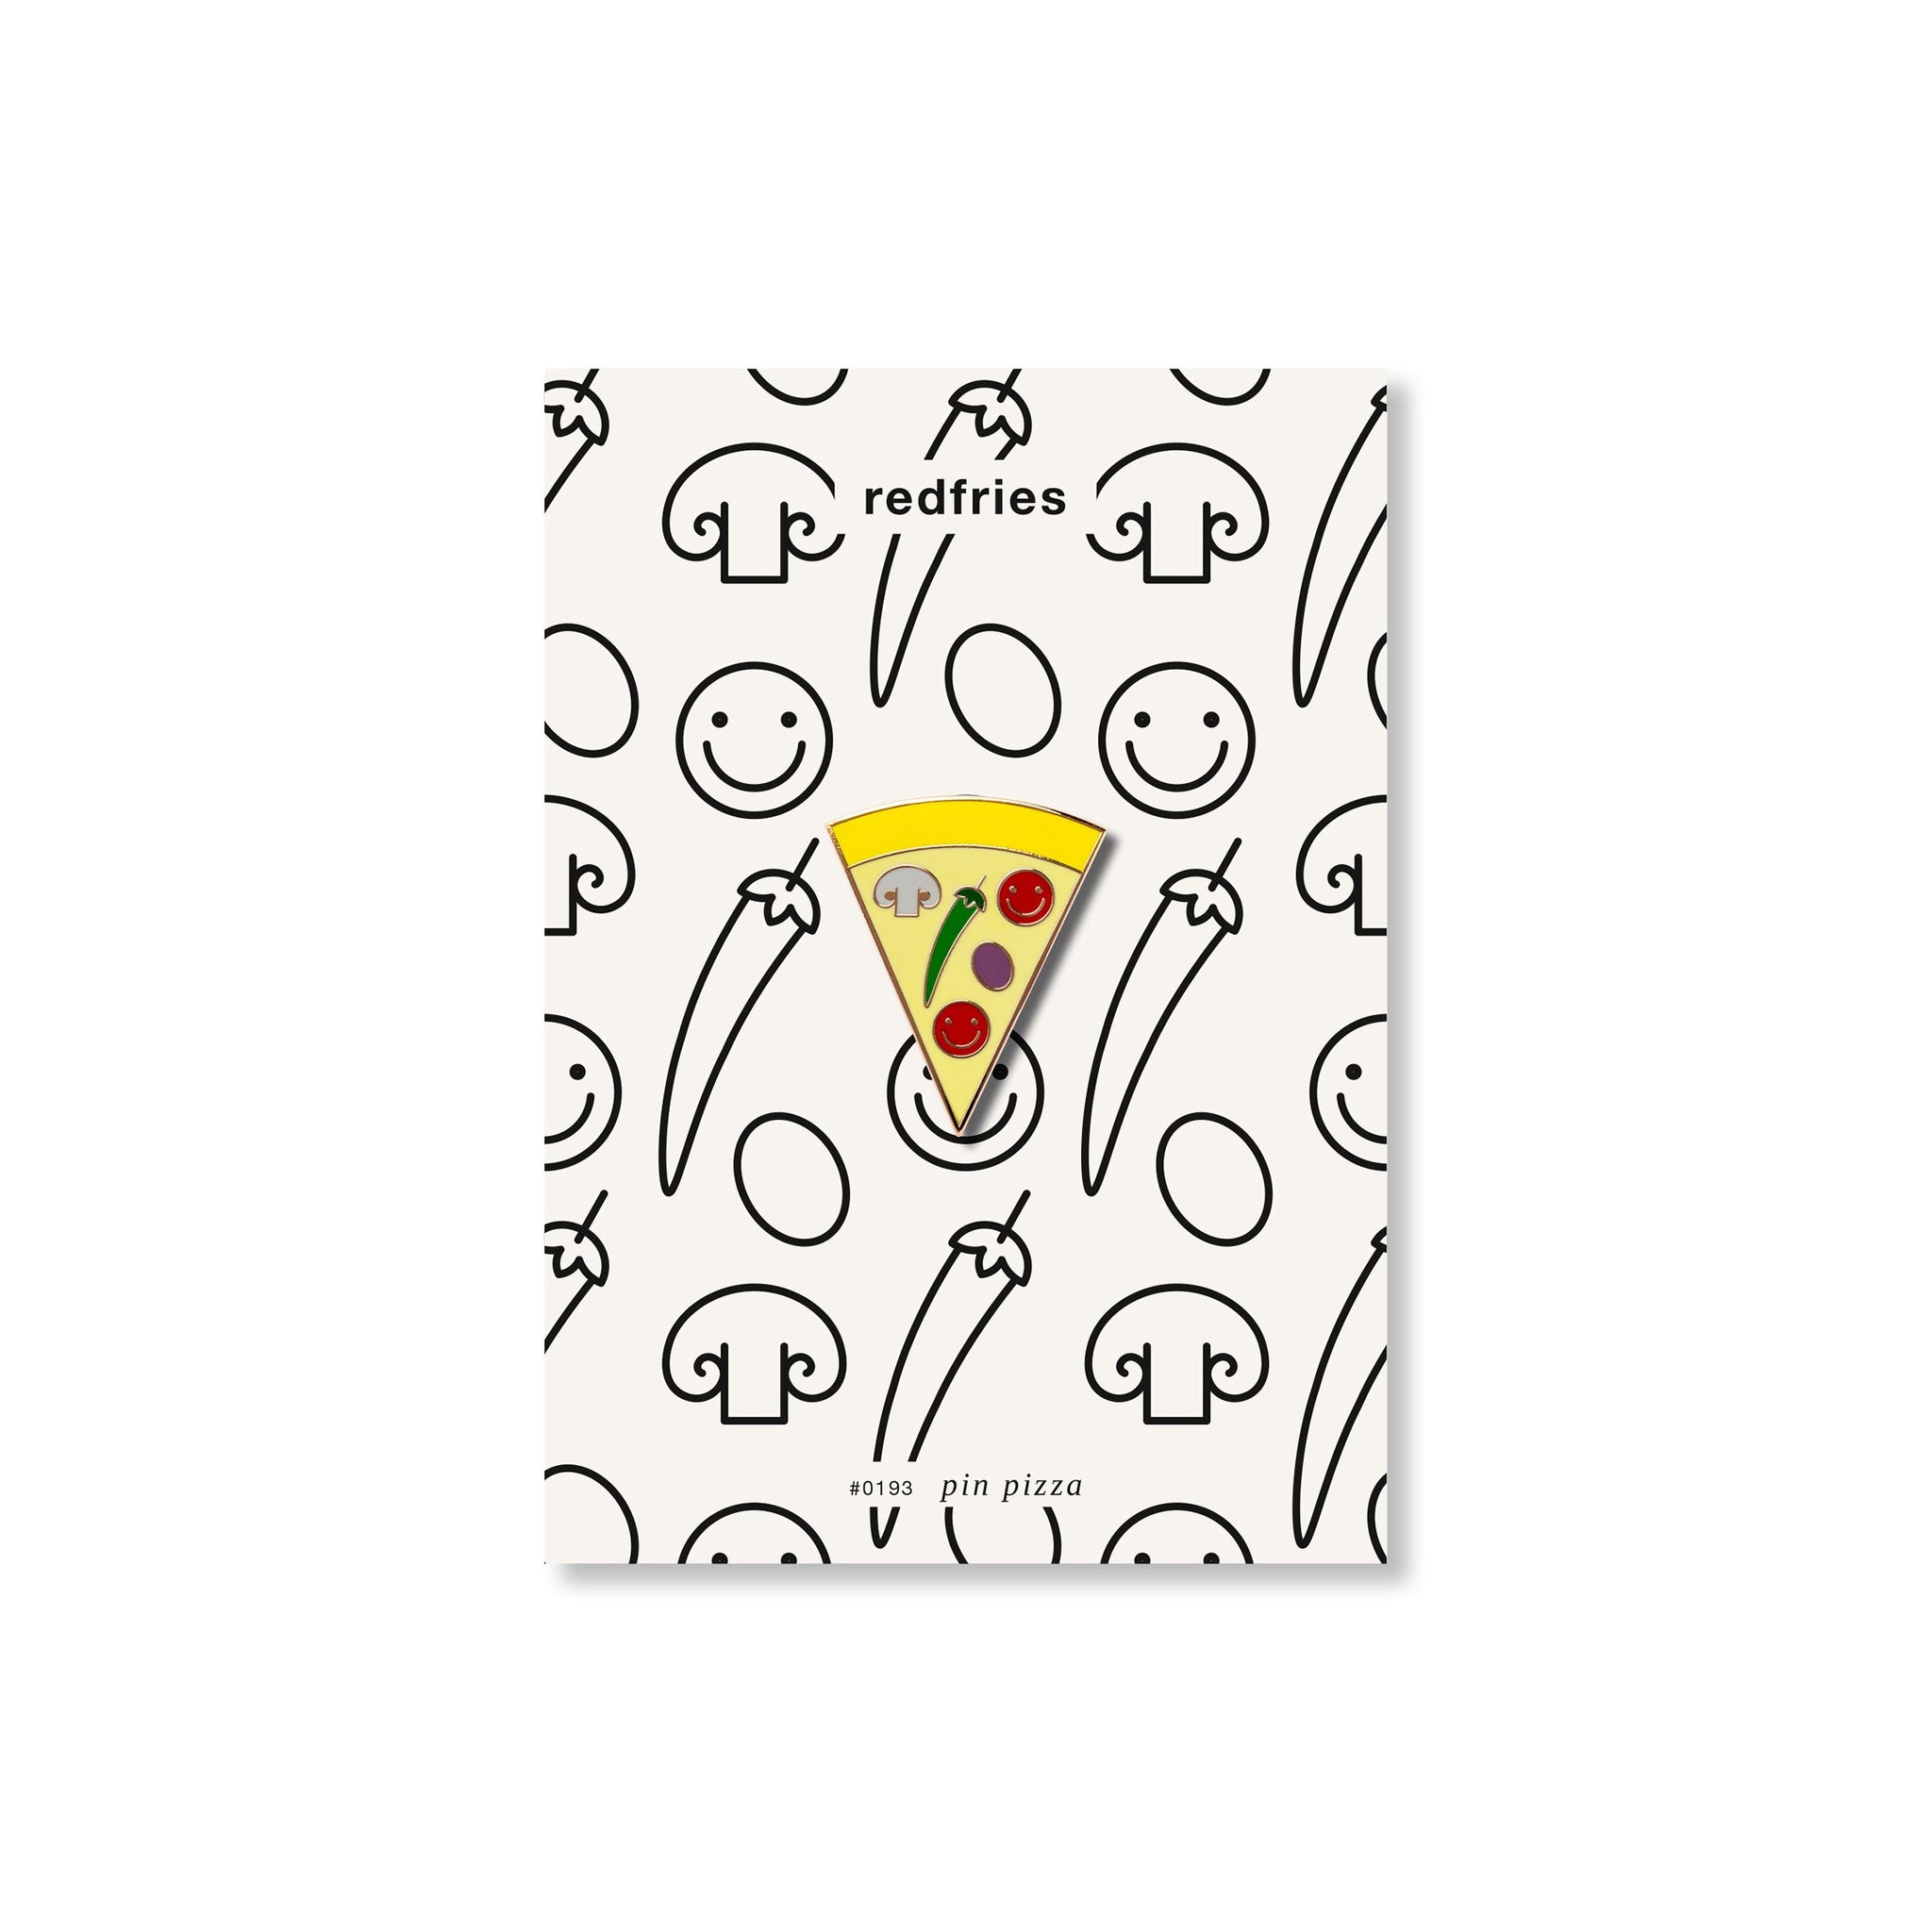 #0193 pin pizza